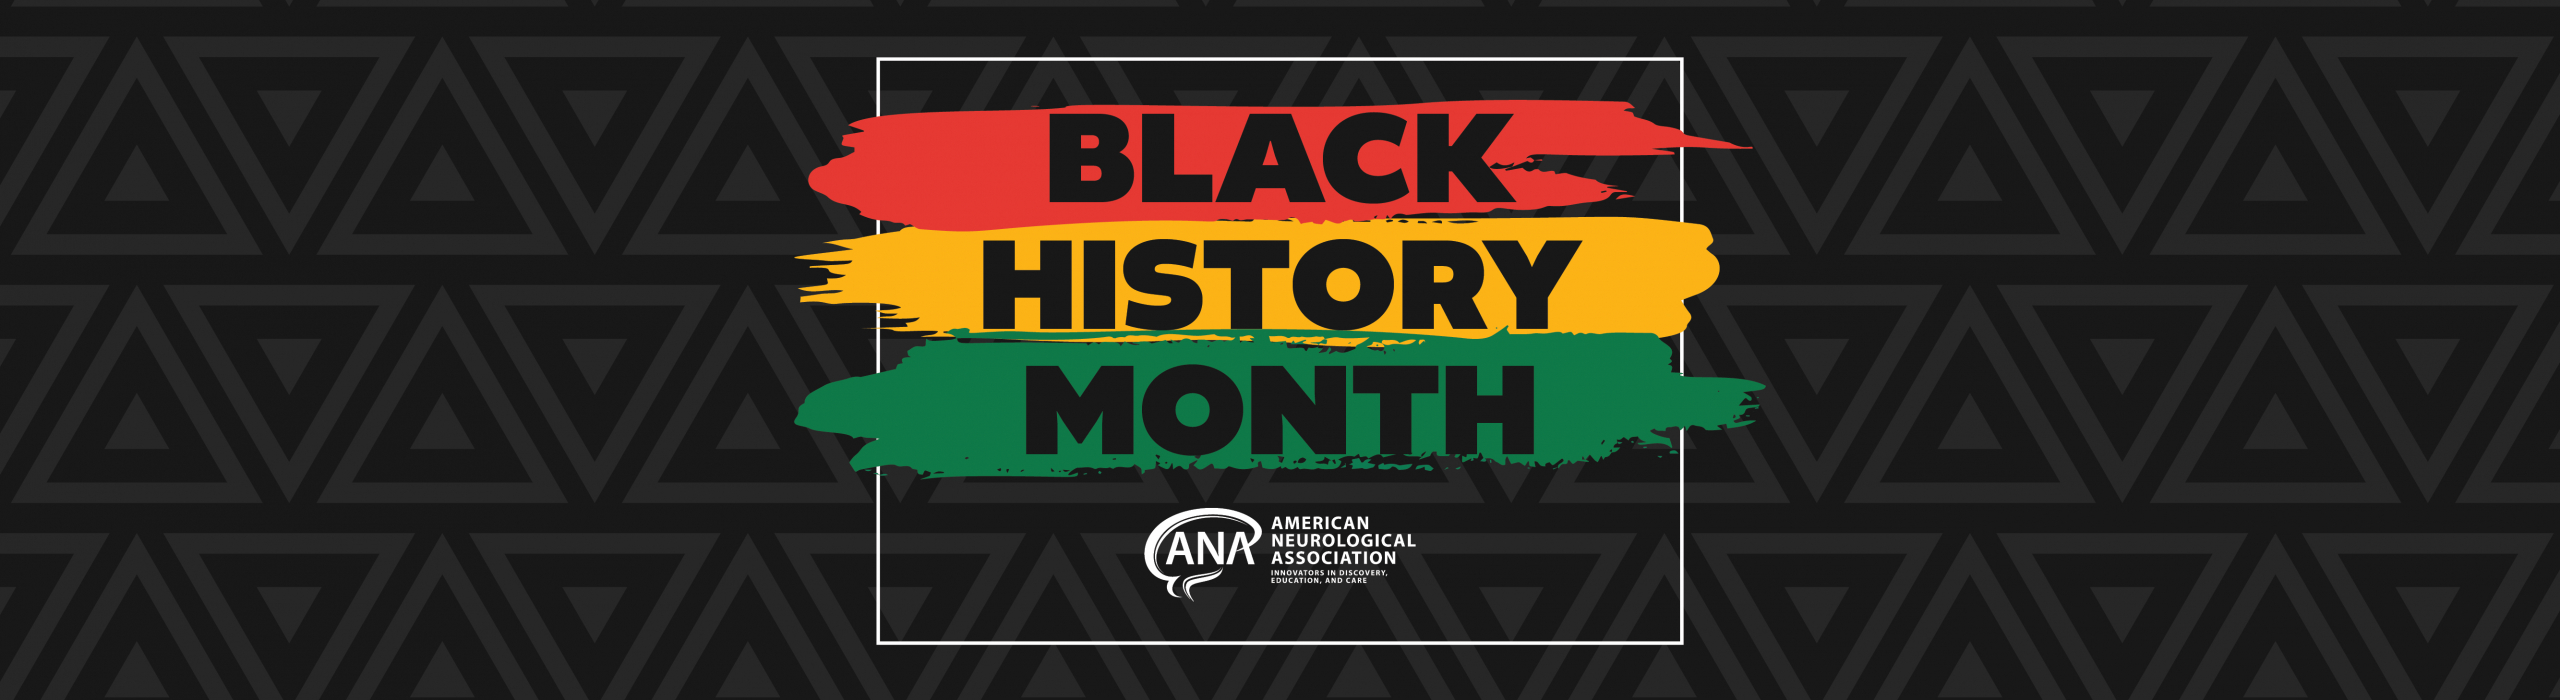 ANA Black History Month Banner